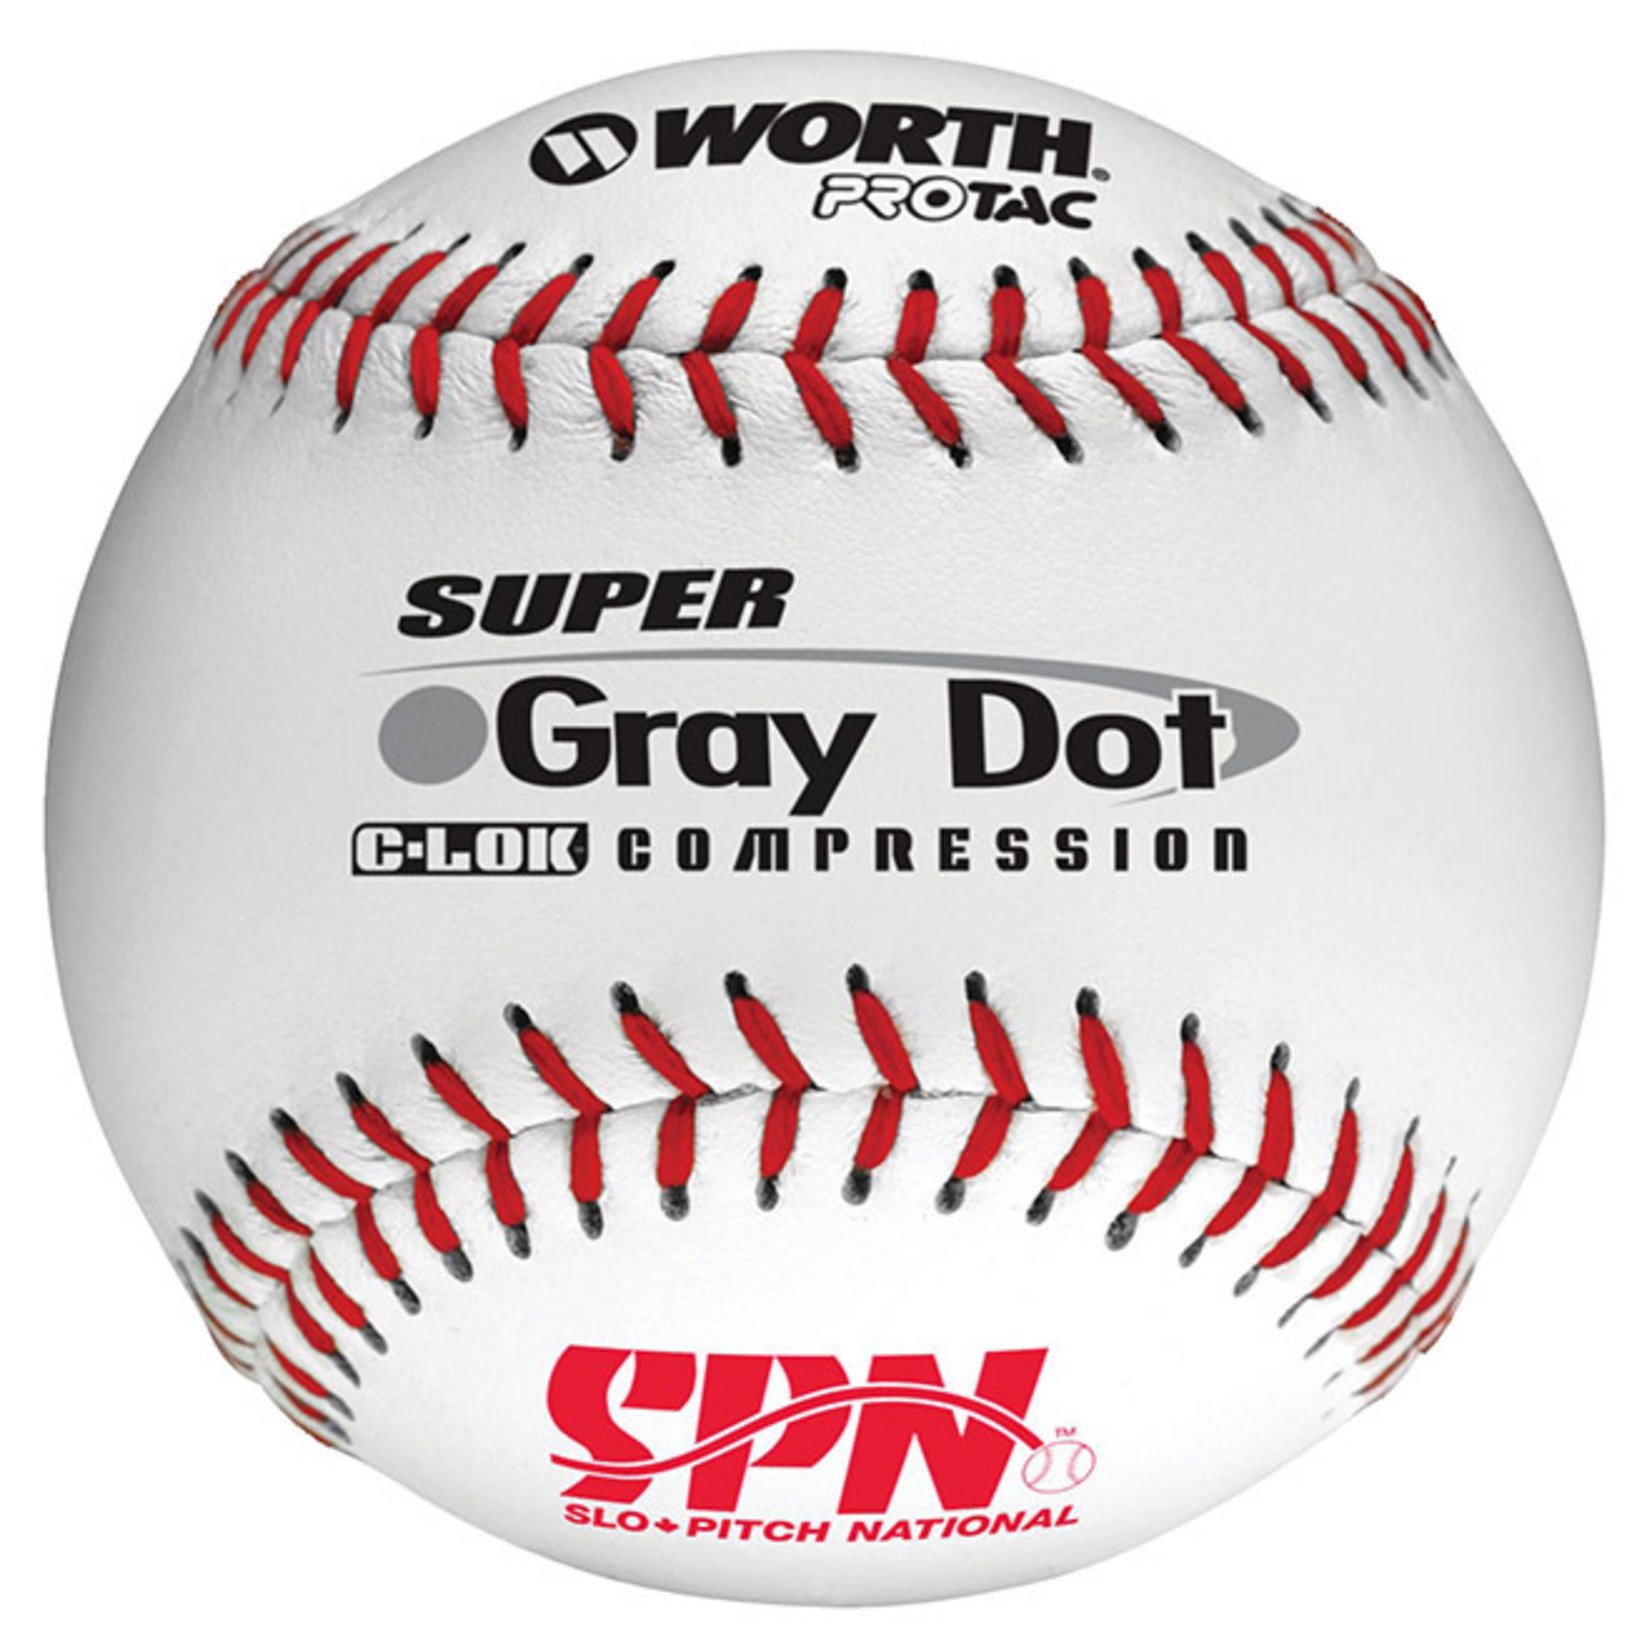 WORTH Worth Super Gray Dot Slow Pitch Ball 12"